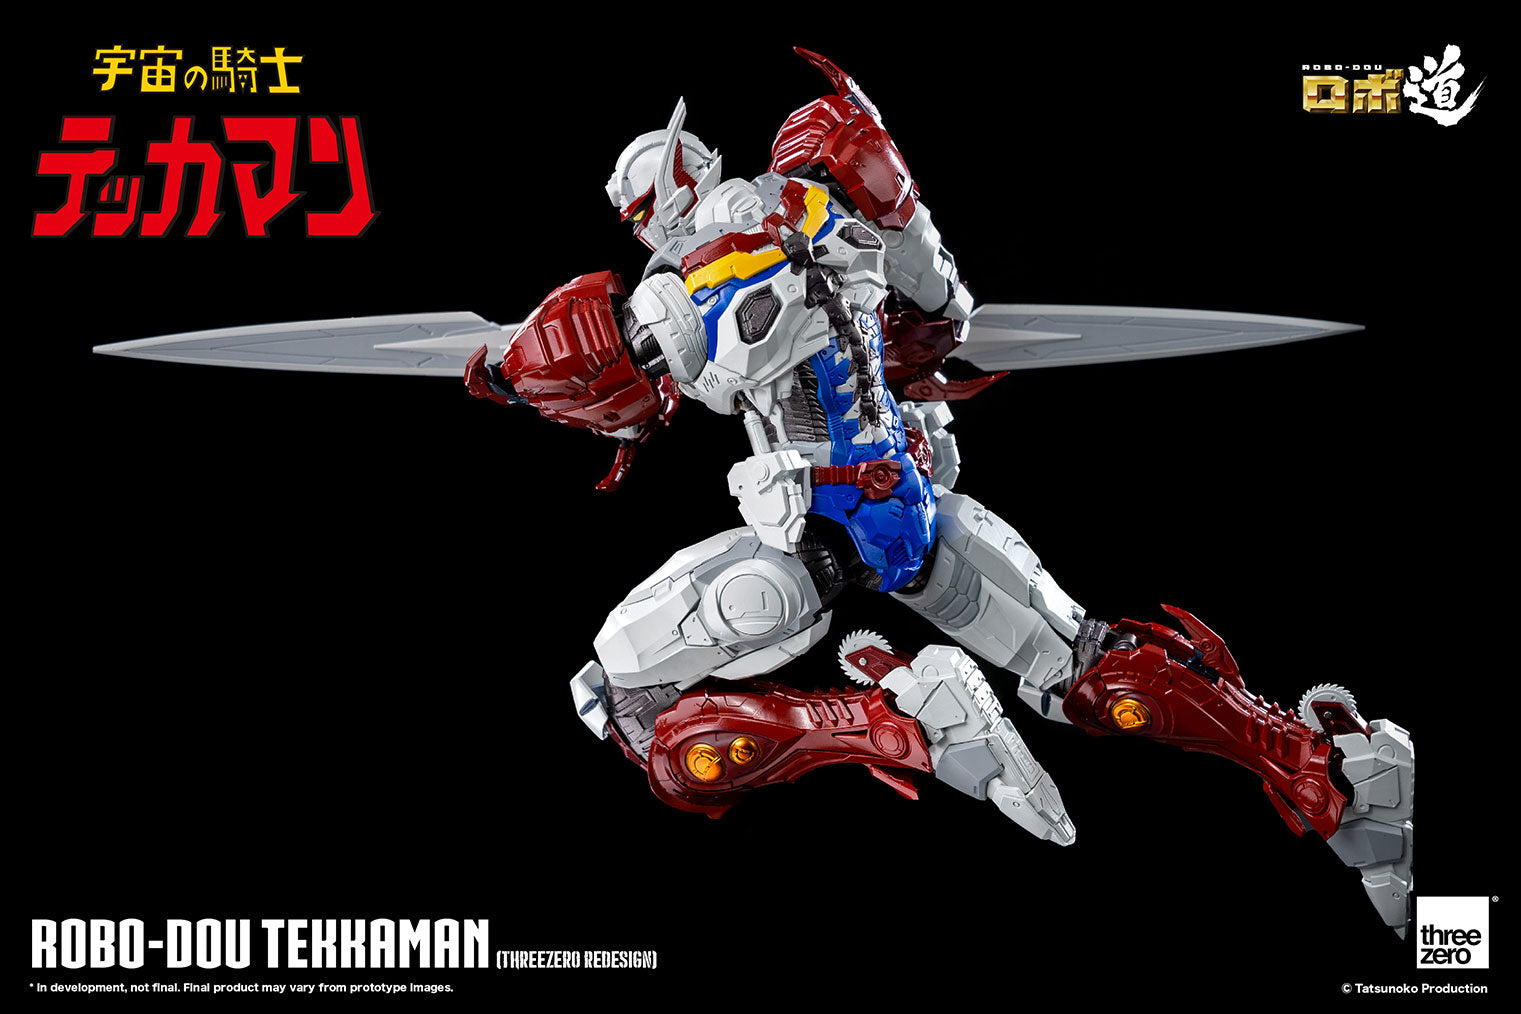 threezero - ROBO-DOU - Tekkaman: The Space Knight - Tekkaman (threezero Redesign)